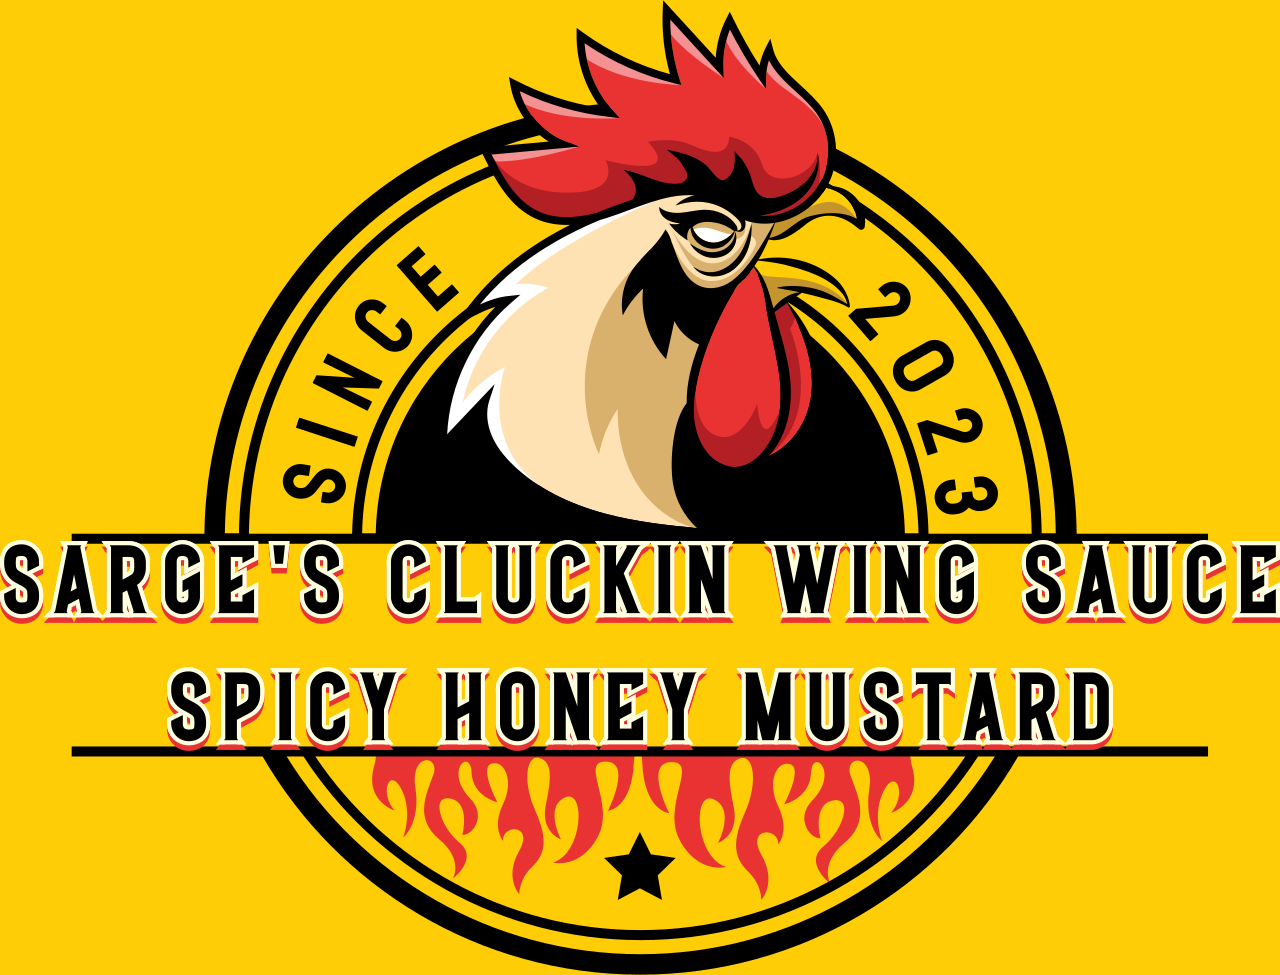 Sarge's Cluckin Wing Sauce
SPICY HONEY MUSTARD's logo